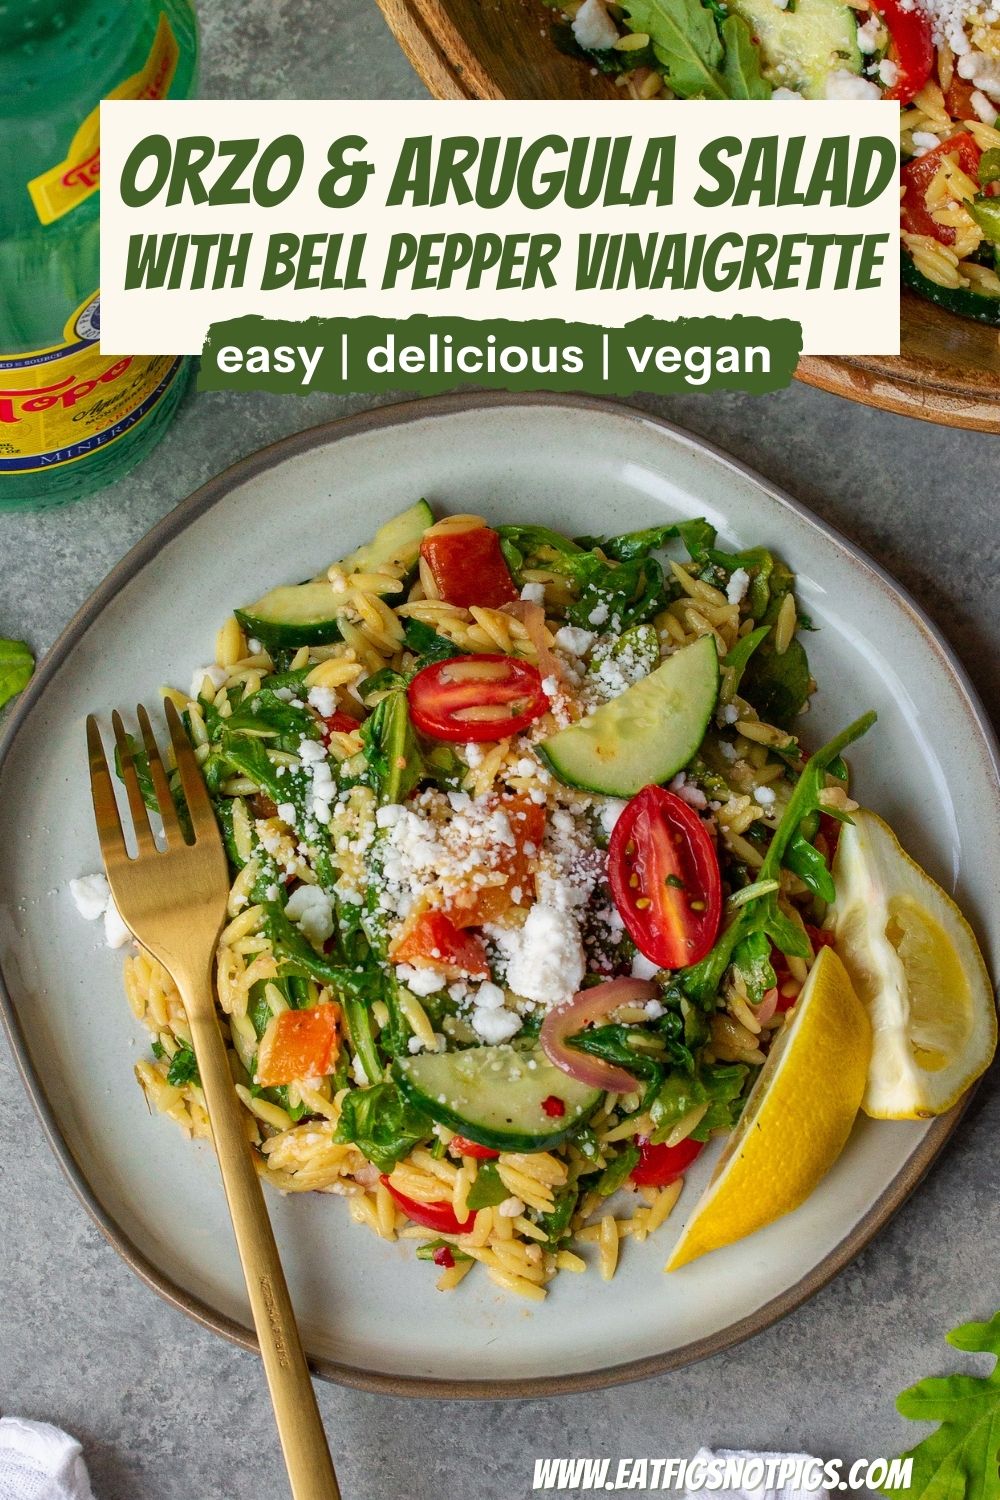 Orzo & Arugula Salad with Bell Pepper Vinaigrette